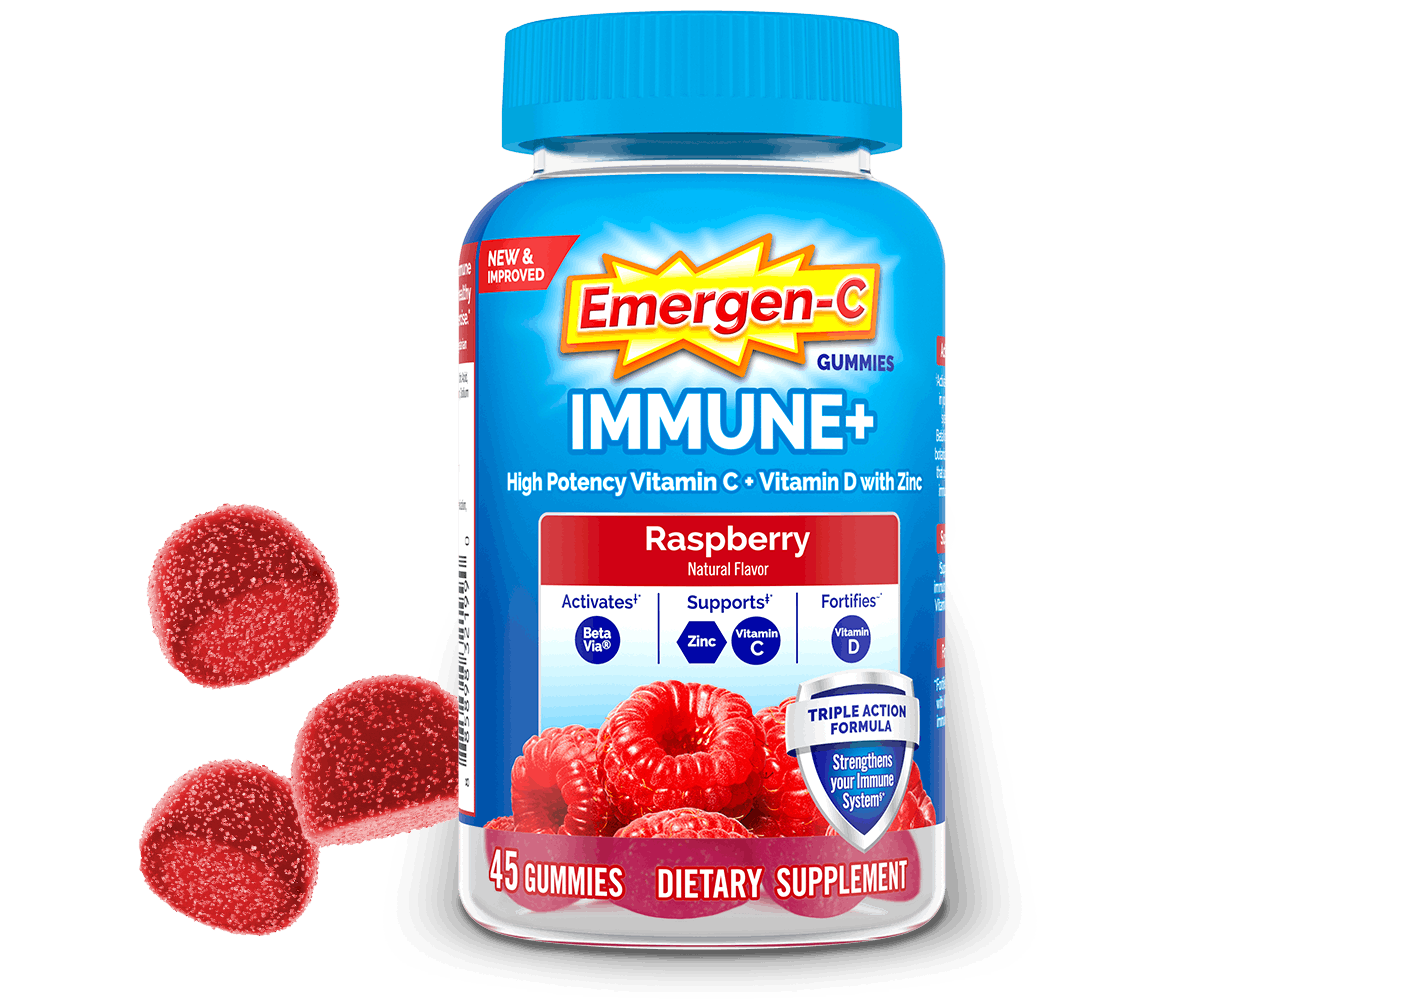 Emergen-C Immune+ Raspberry Gummies with Triple Action product